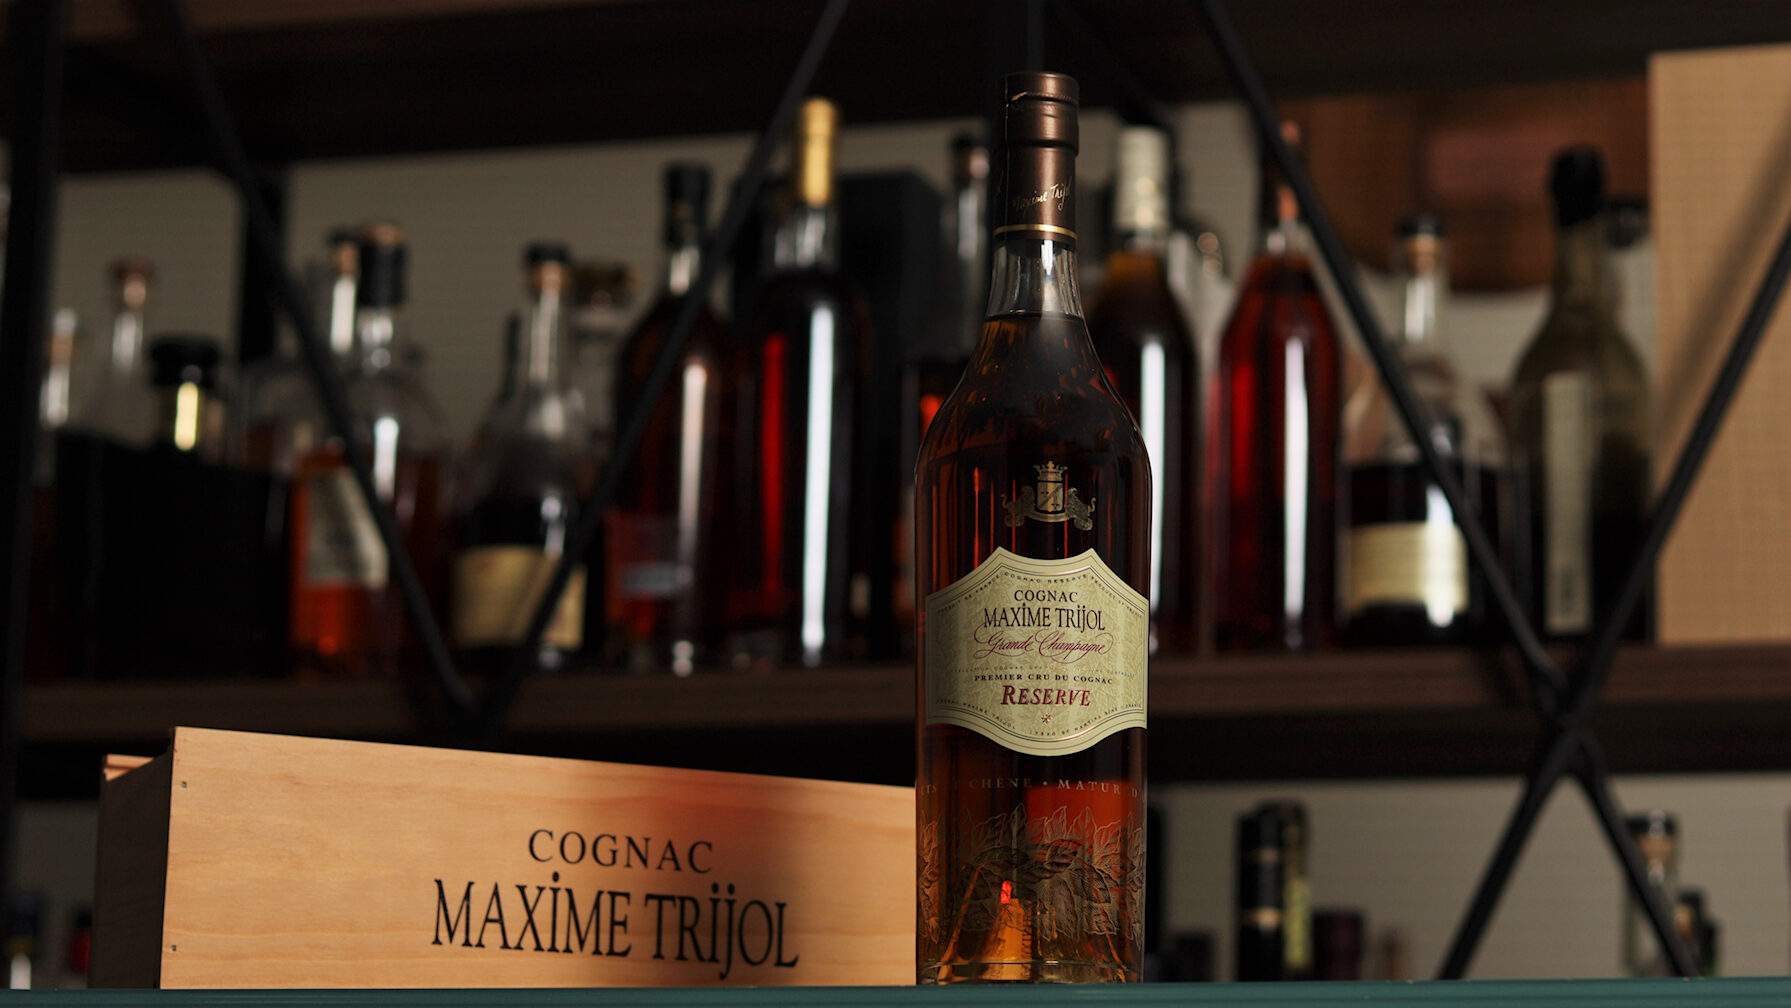 Maxime Trijol Extra Premier Cru Grande Champagne Cognac 750ml Bottle